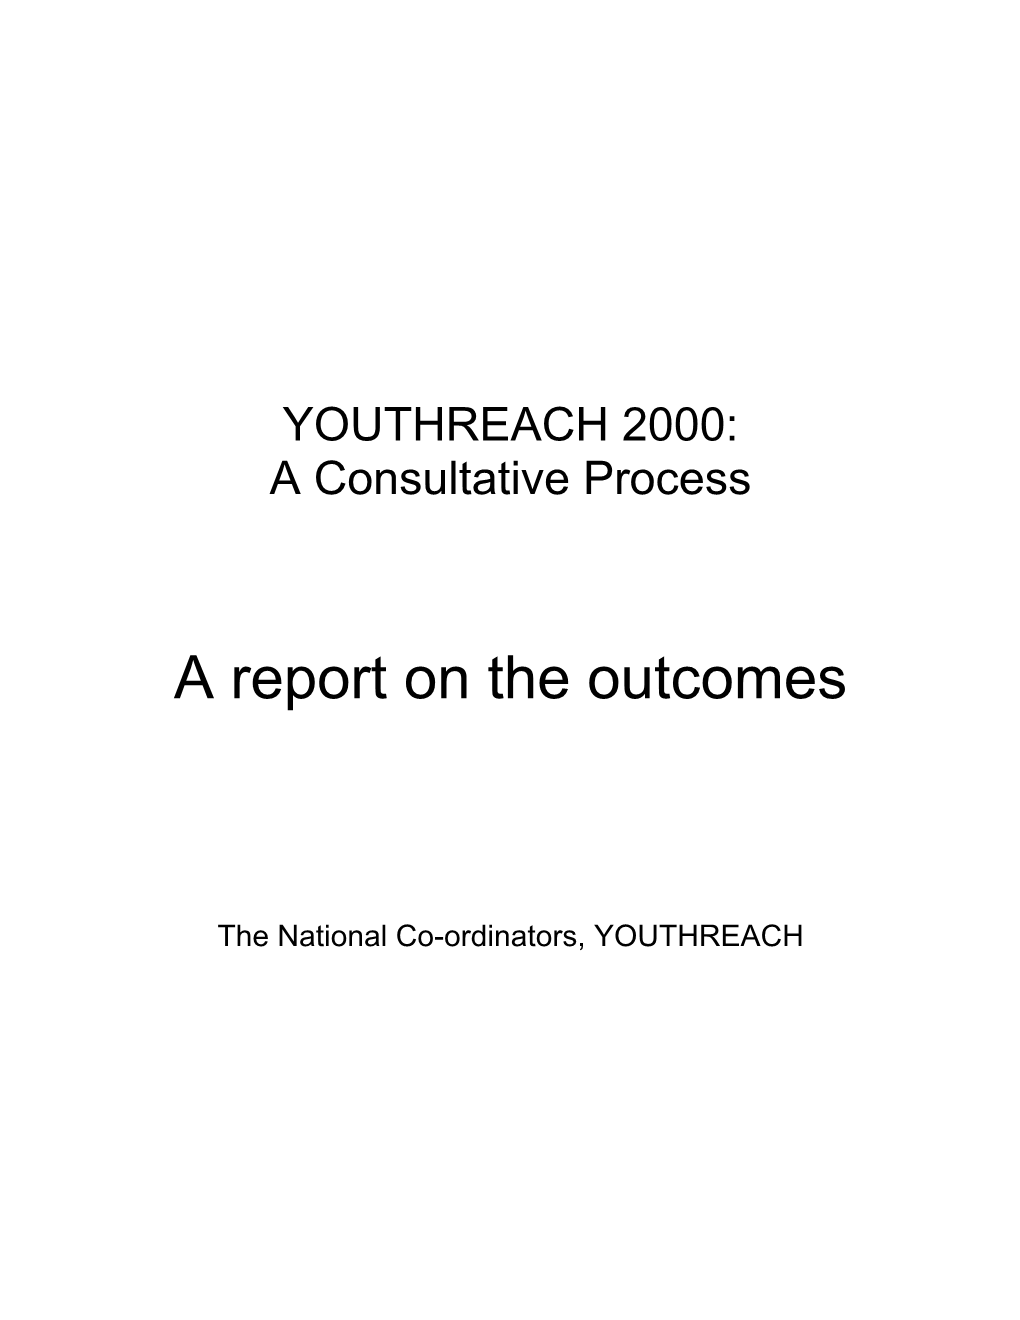 YOUTHREACH 2000: a Consultative Process